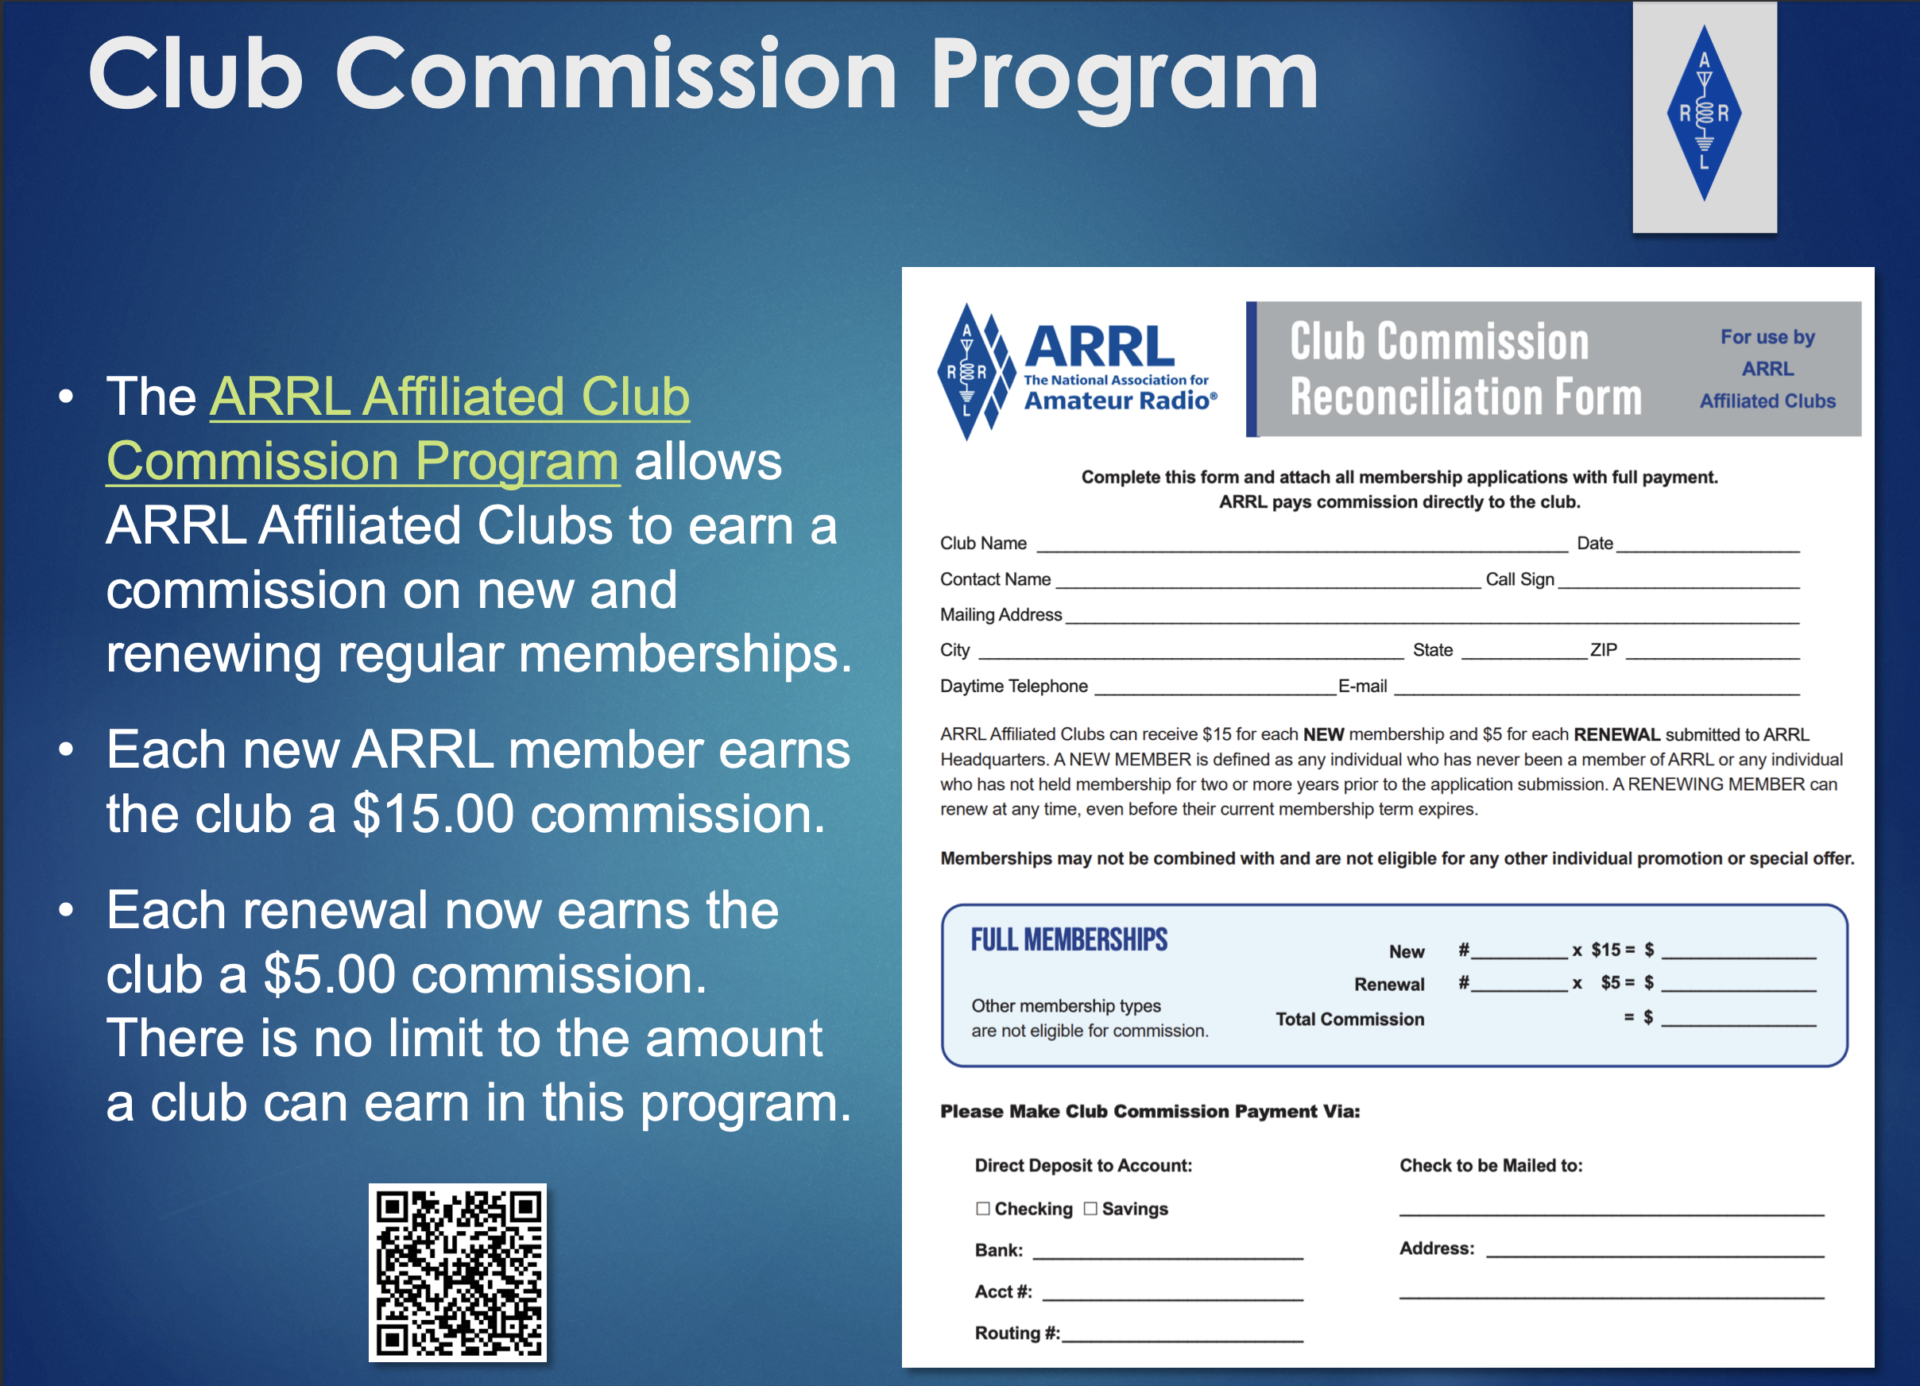 Details of the new ARRL Club Commission Program